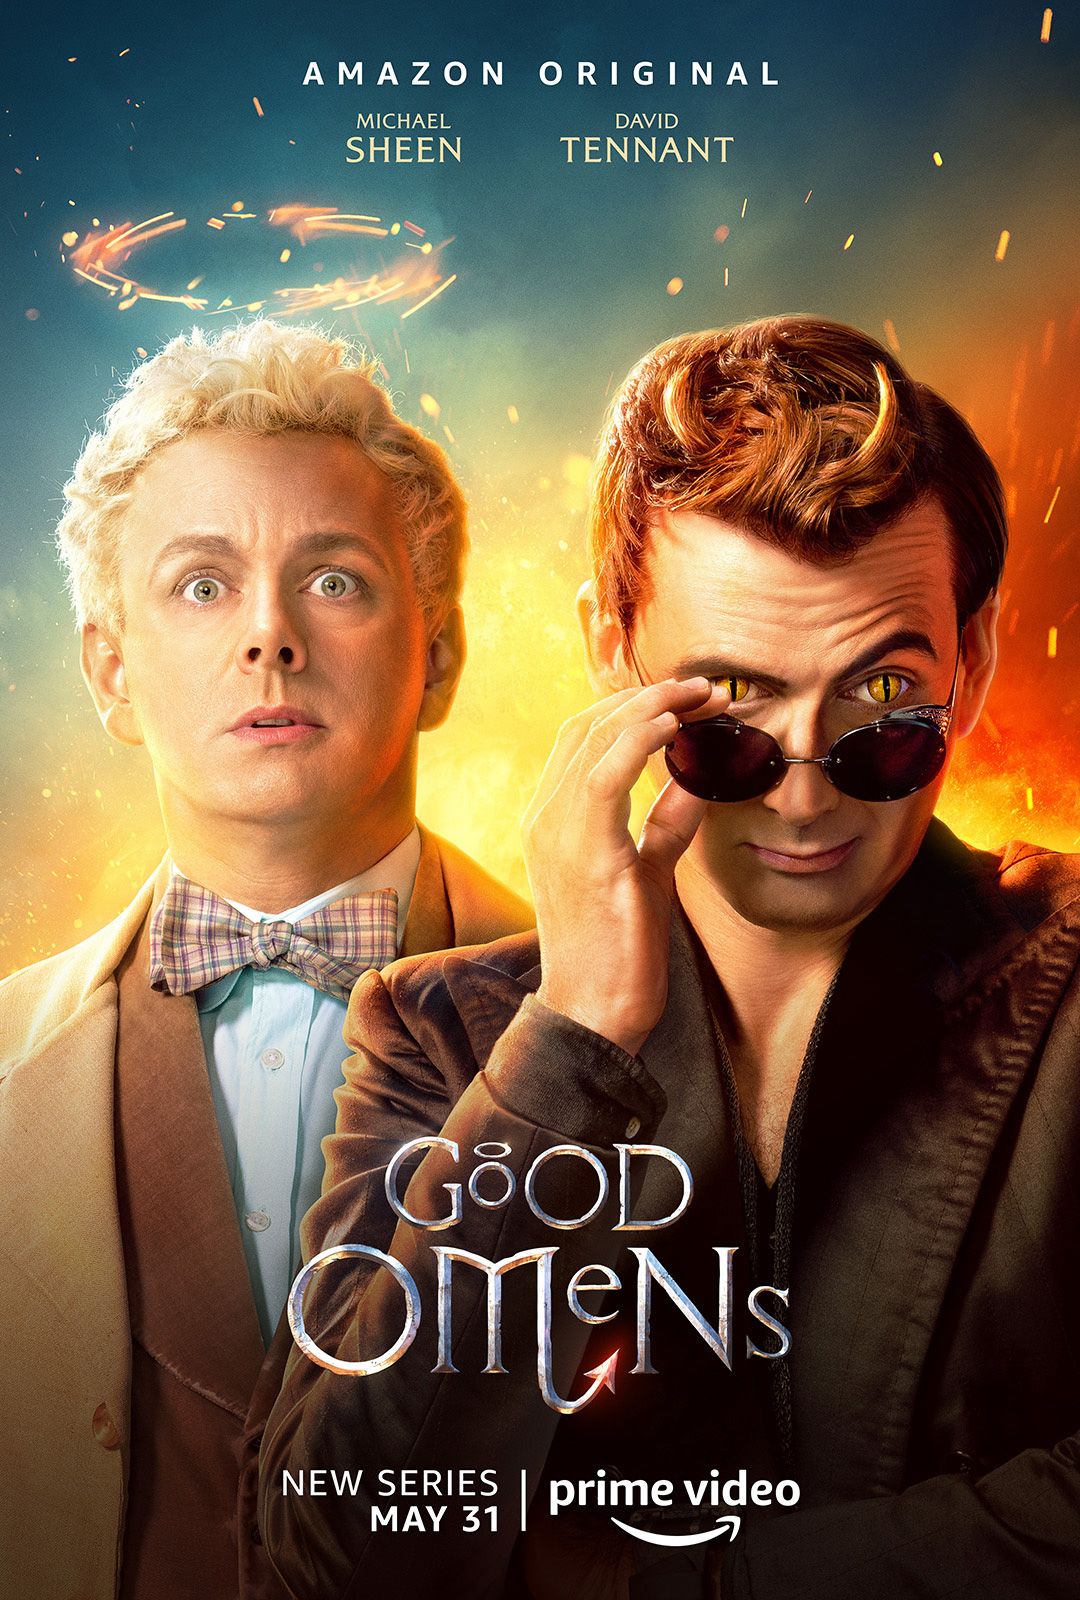 ‘Good Omens’ Premieres on Amazon May 31 Next TV